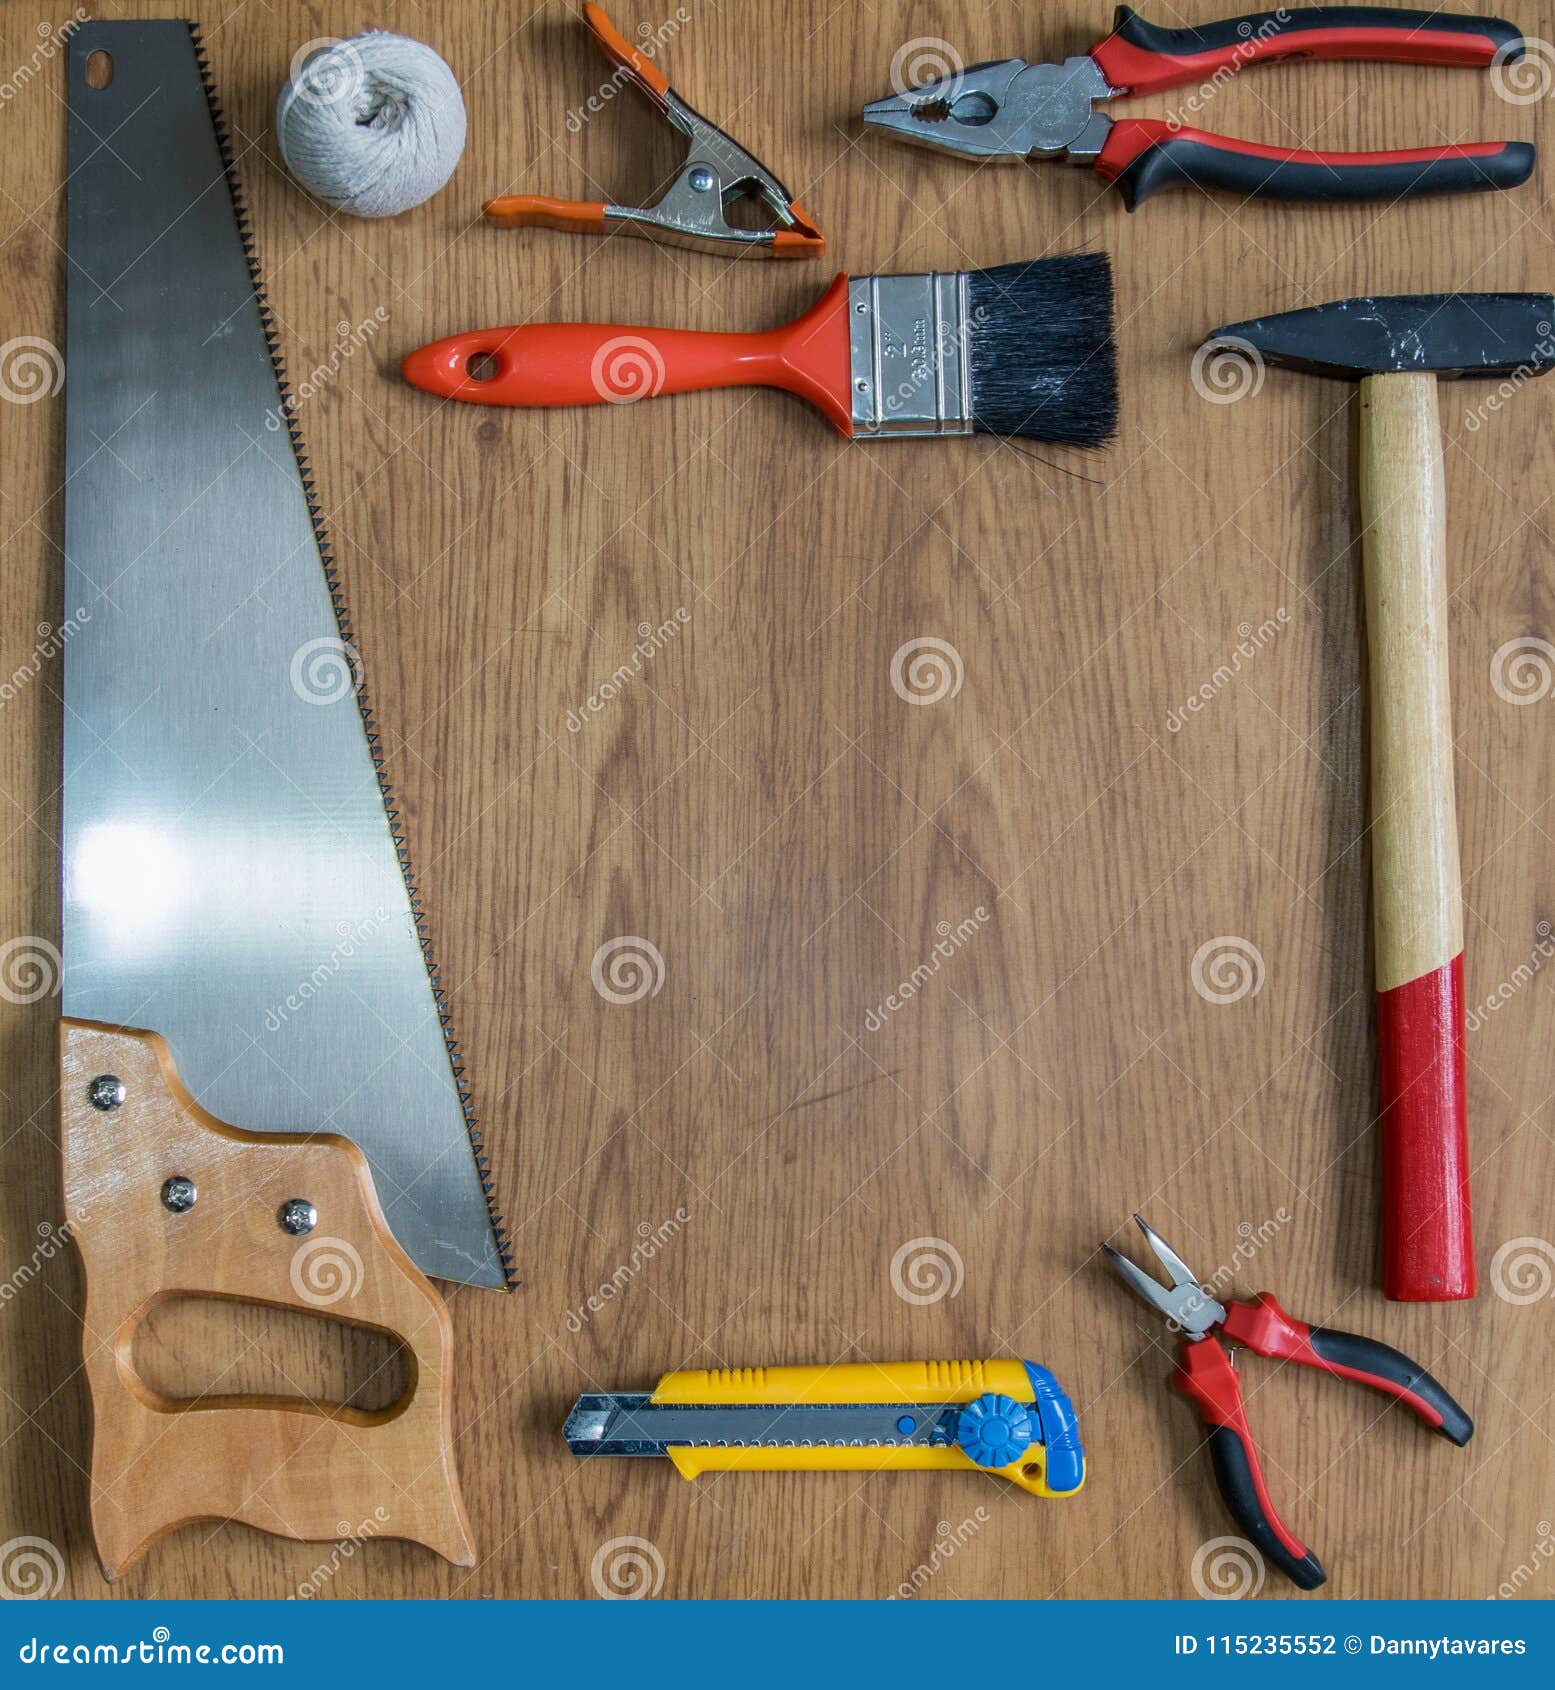 tools for manual arts & crafts